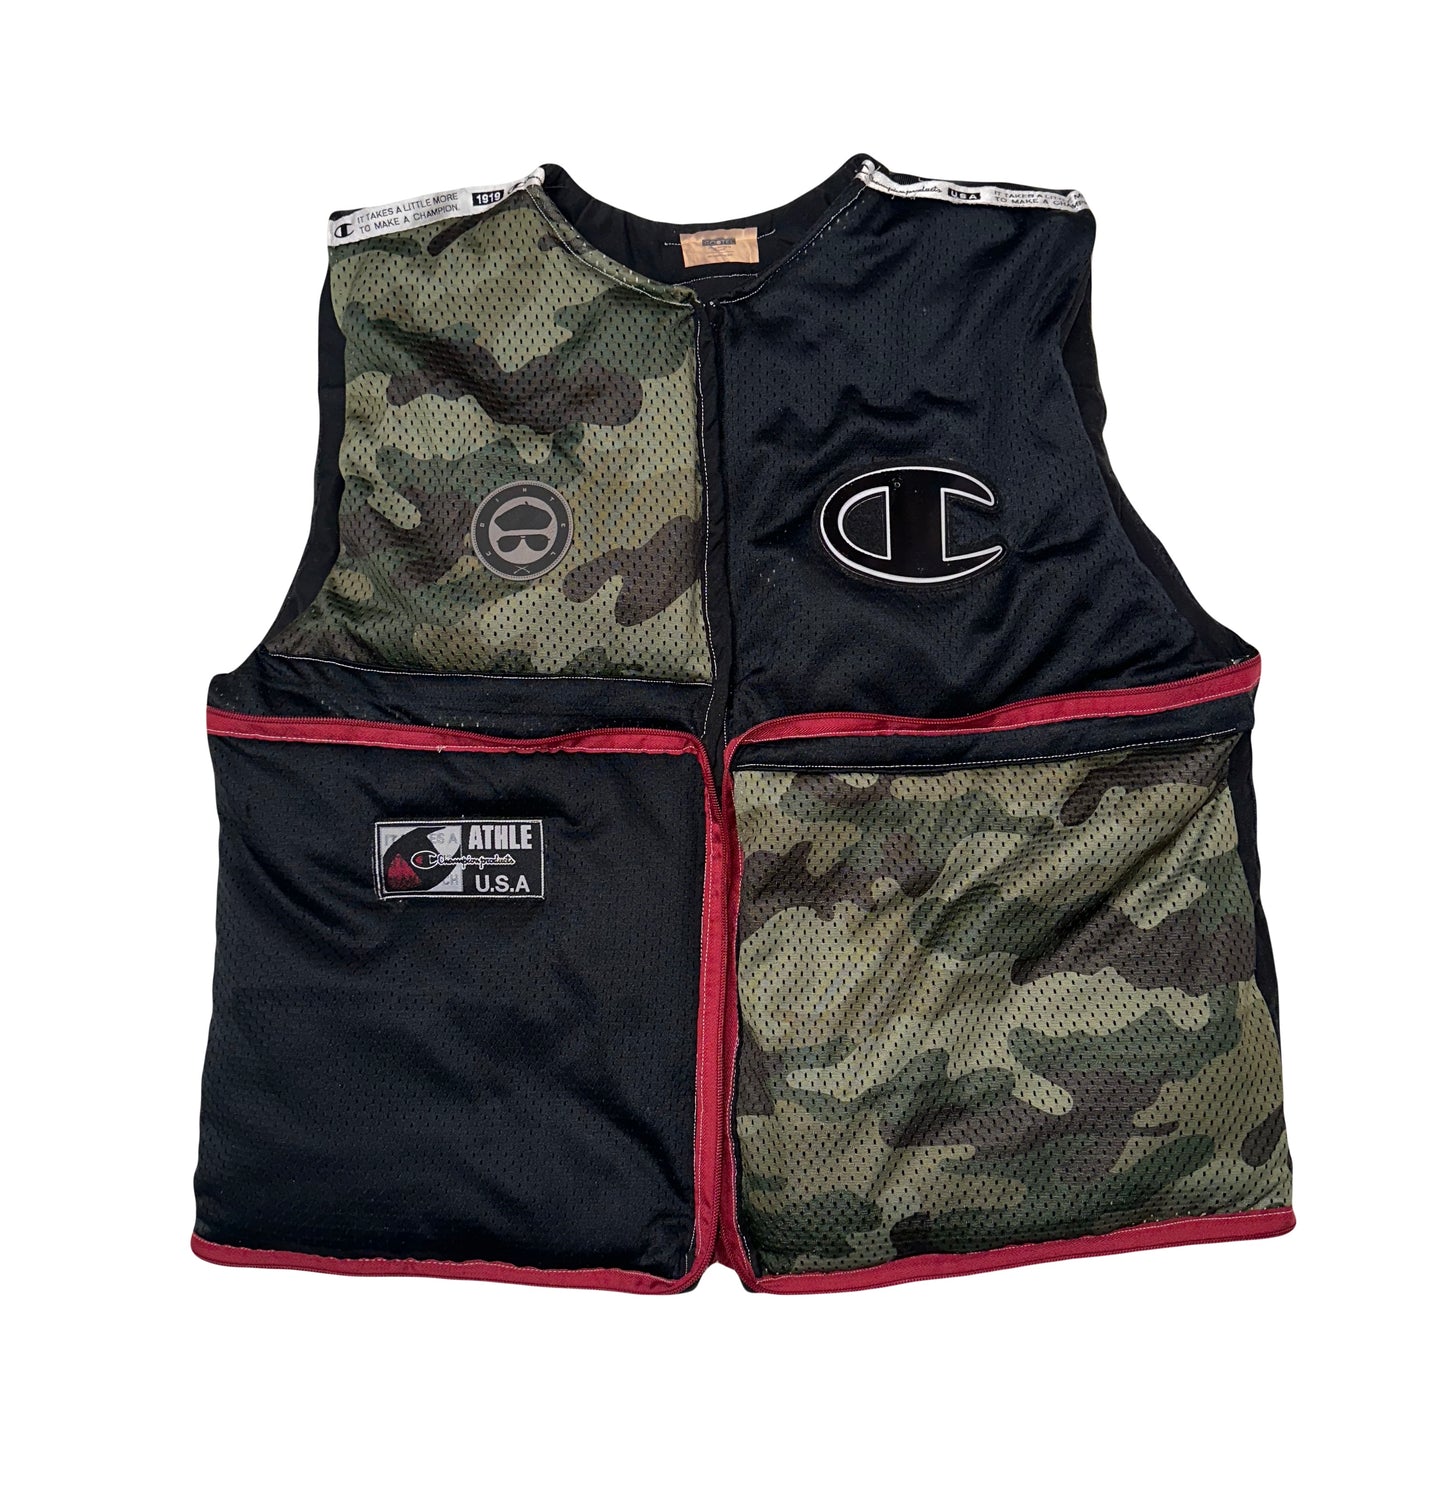 Cointel x Champion 1of1 Bag Vest